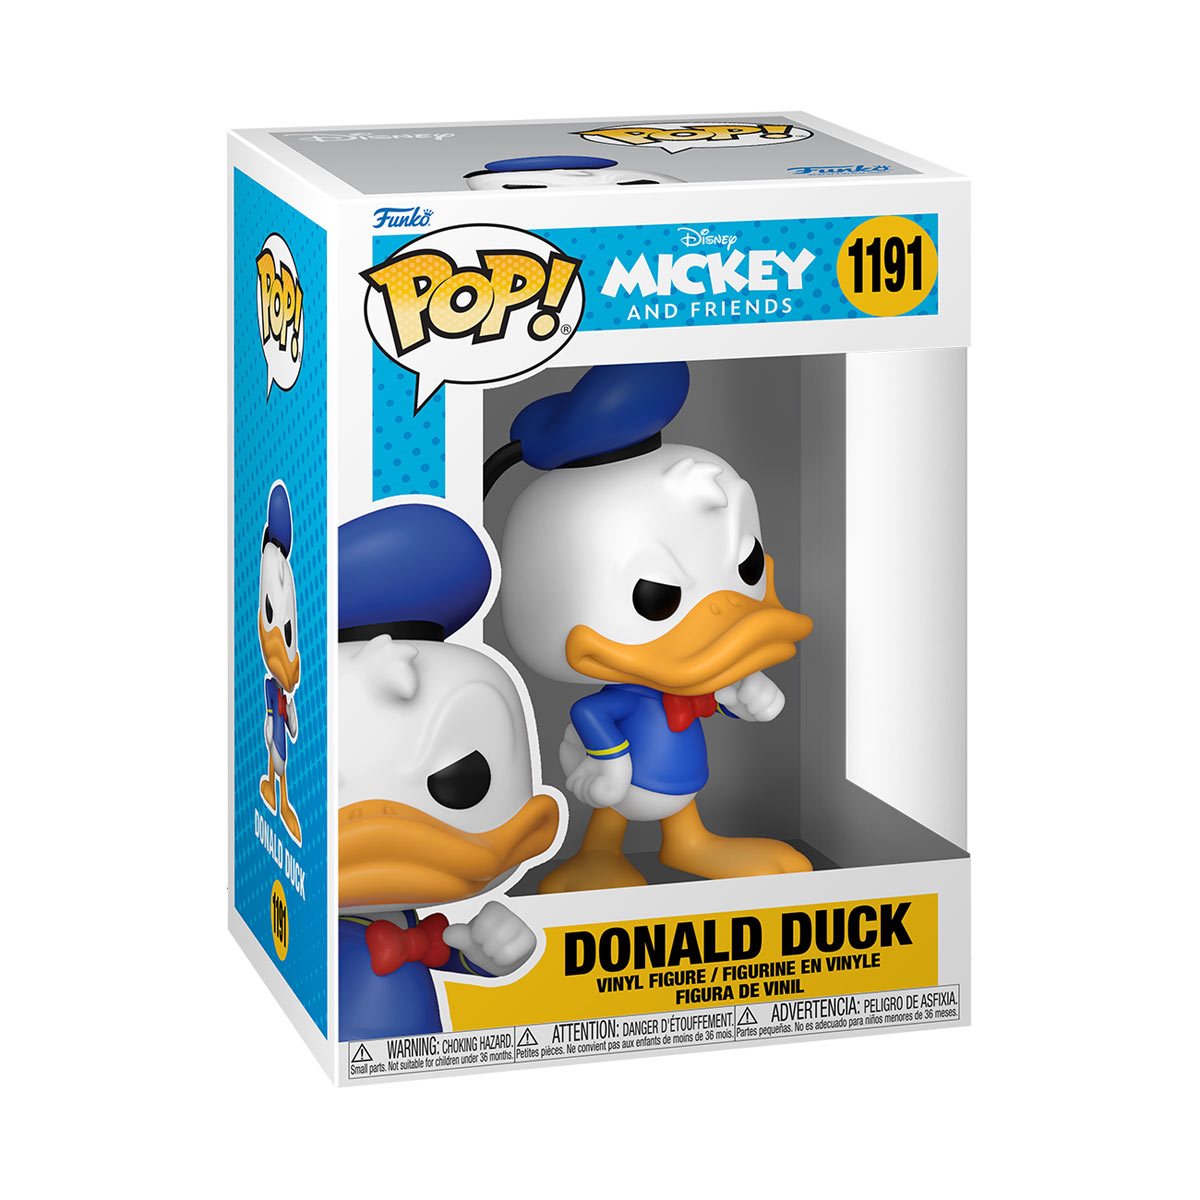 Funko Pop! Disney Classics Donald Duck Pop! Vinyl Figure